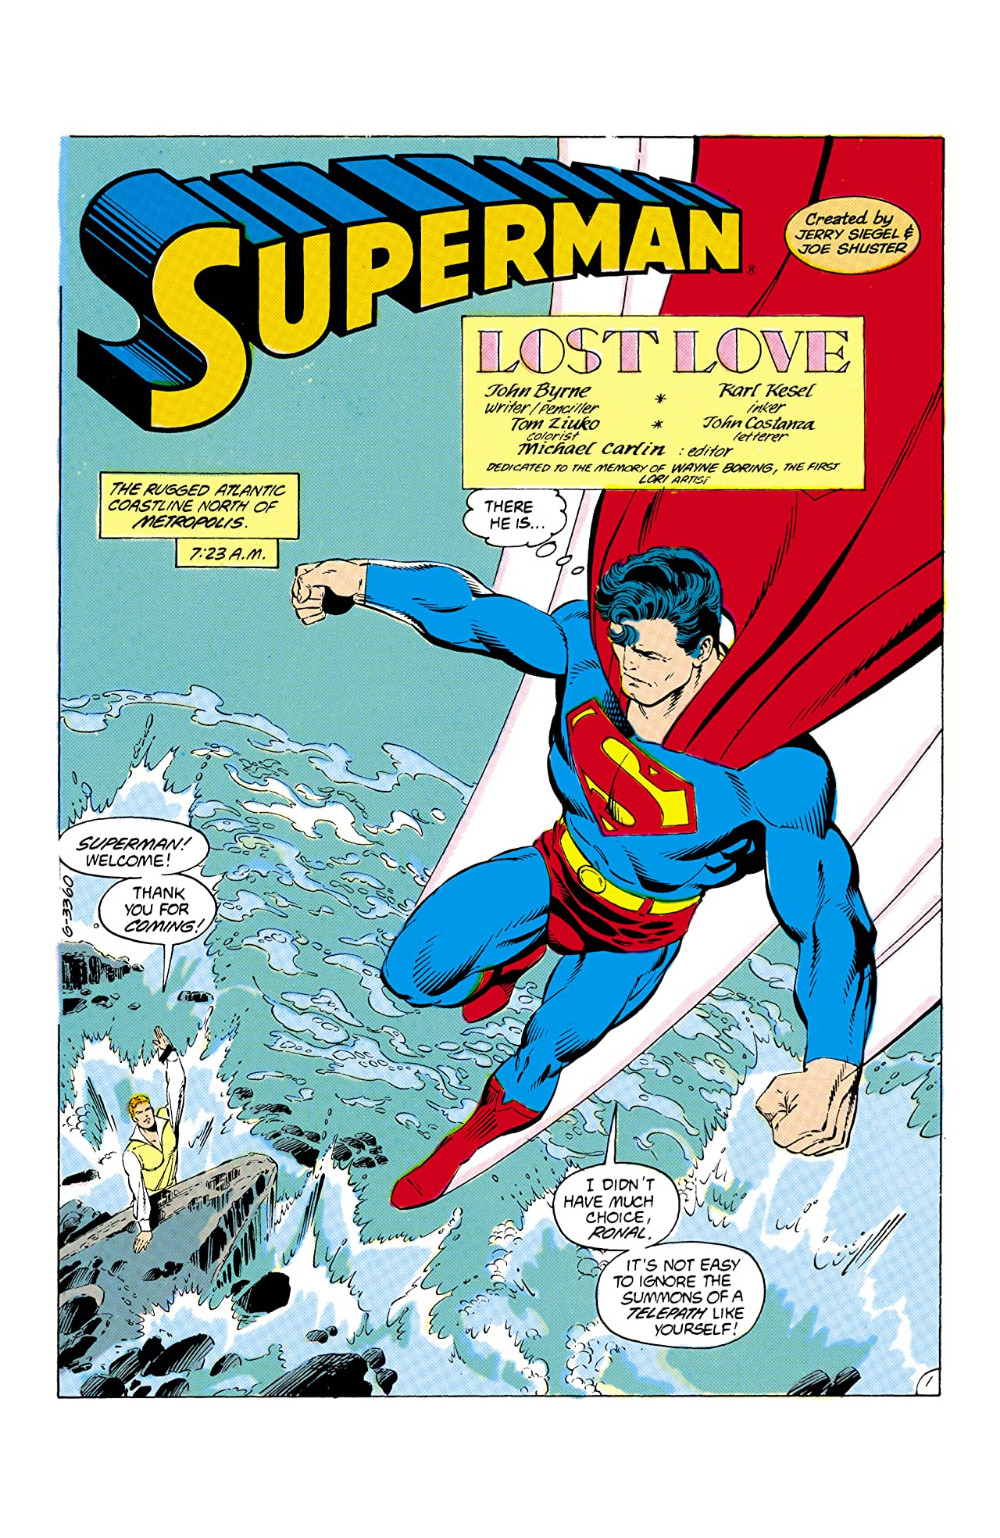 Superman: The Man of Steel Vol. 2 by John Byrne: 9781779505910